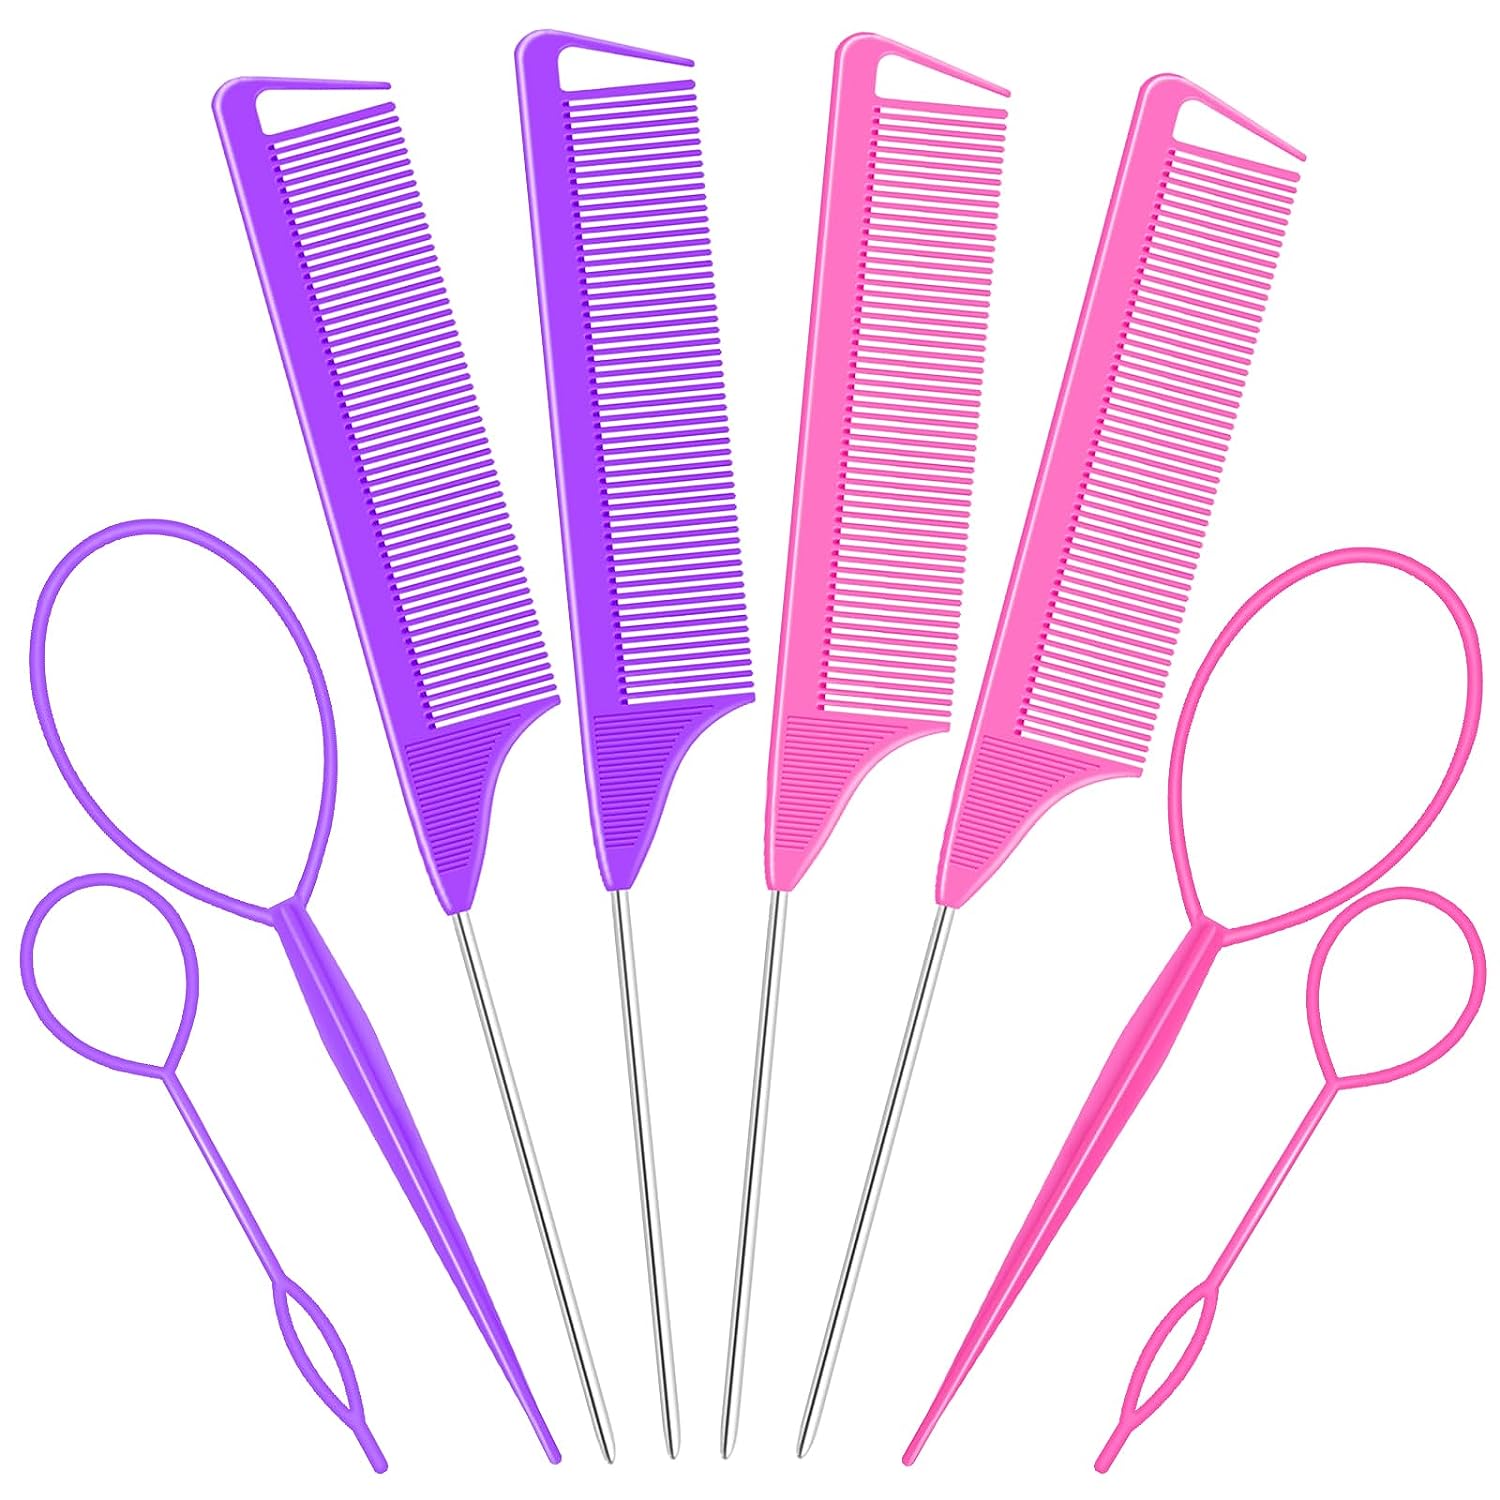 AIHOPESTO Hair Styling Tool Set Pink/Purple (8PCS)